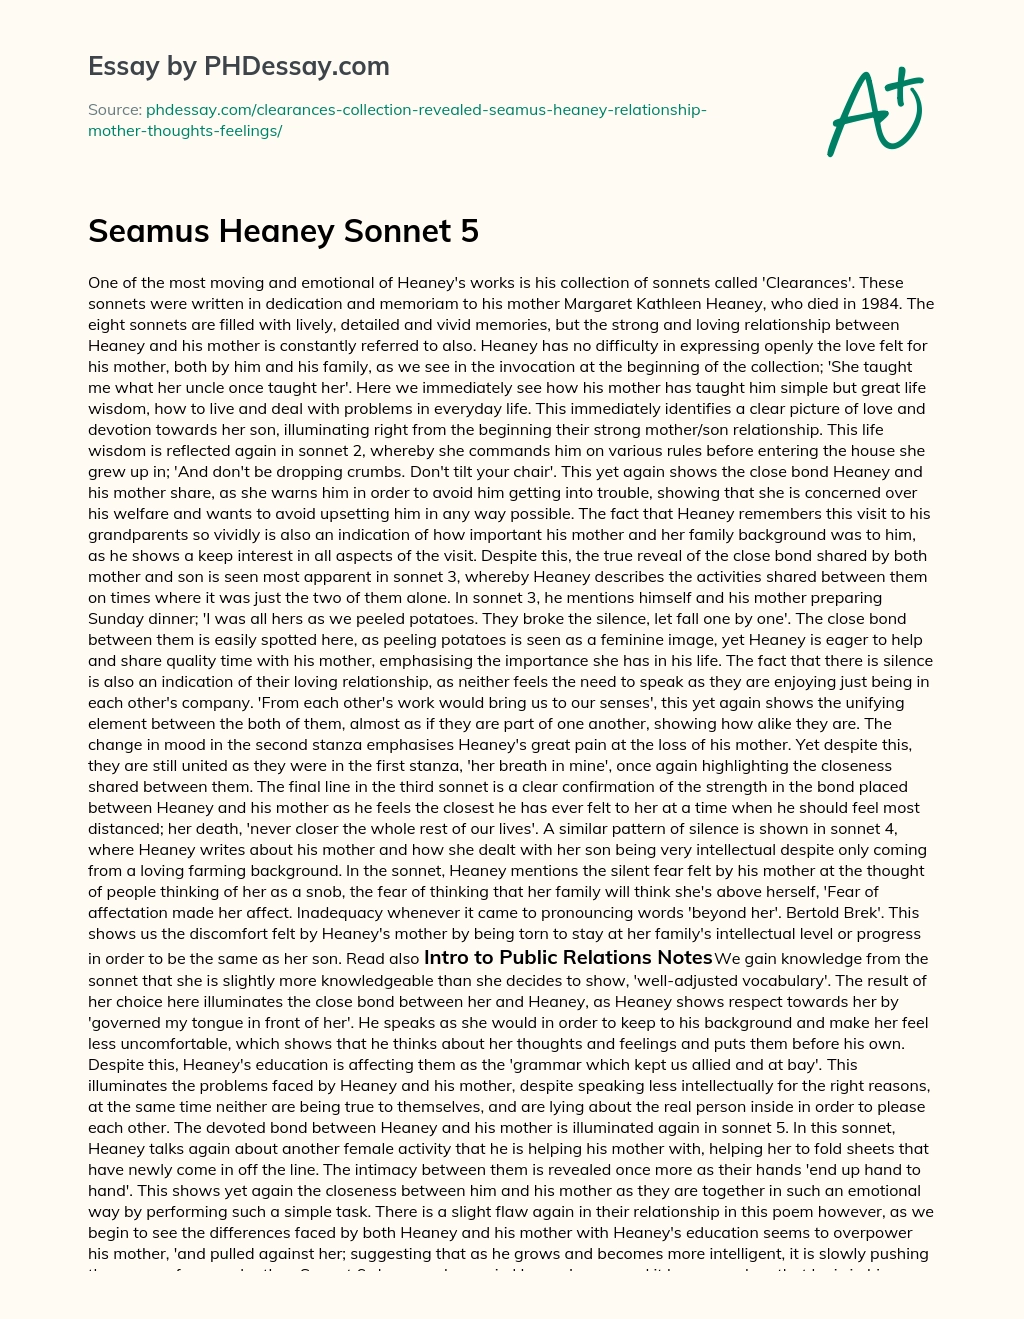 Seamus Heaney Sonnet 5 essay